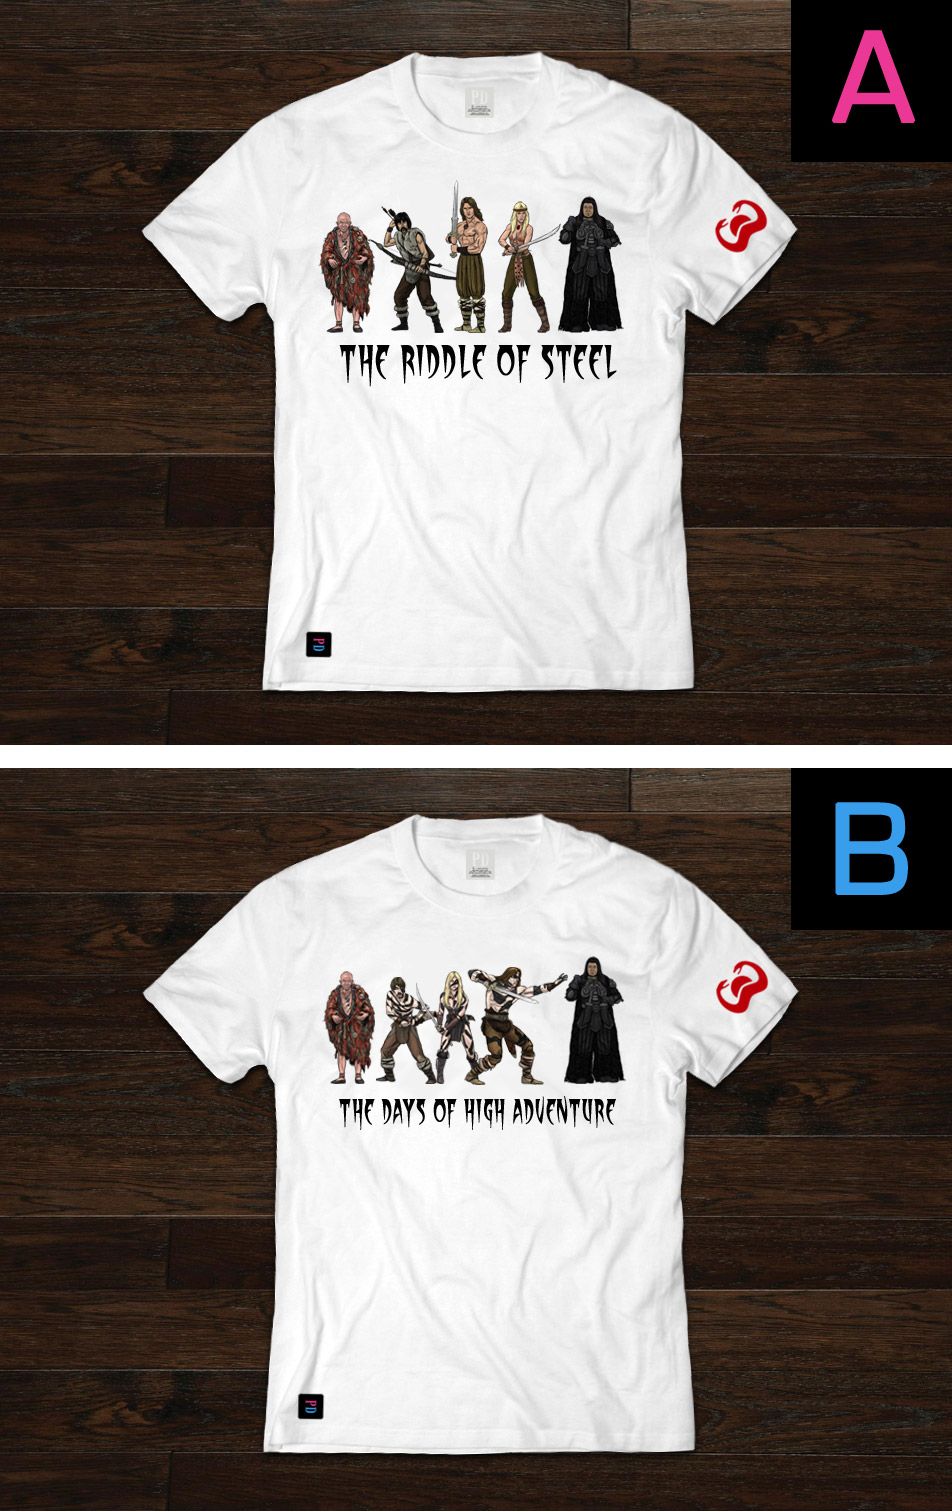 Hyborian Tale T-Shirt designs by Marten Go aka MGO